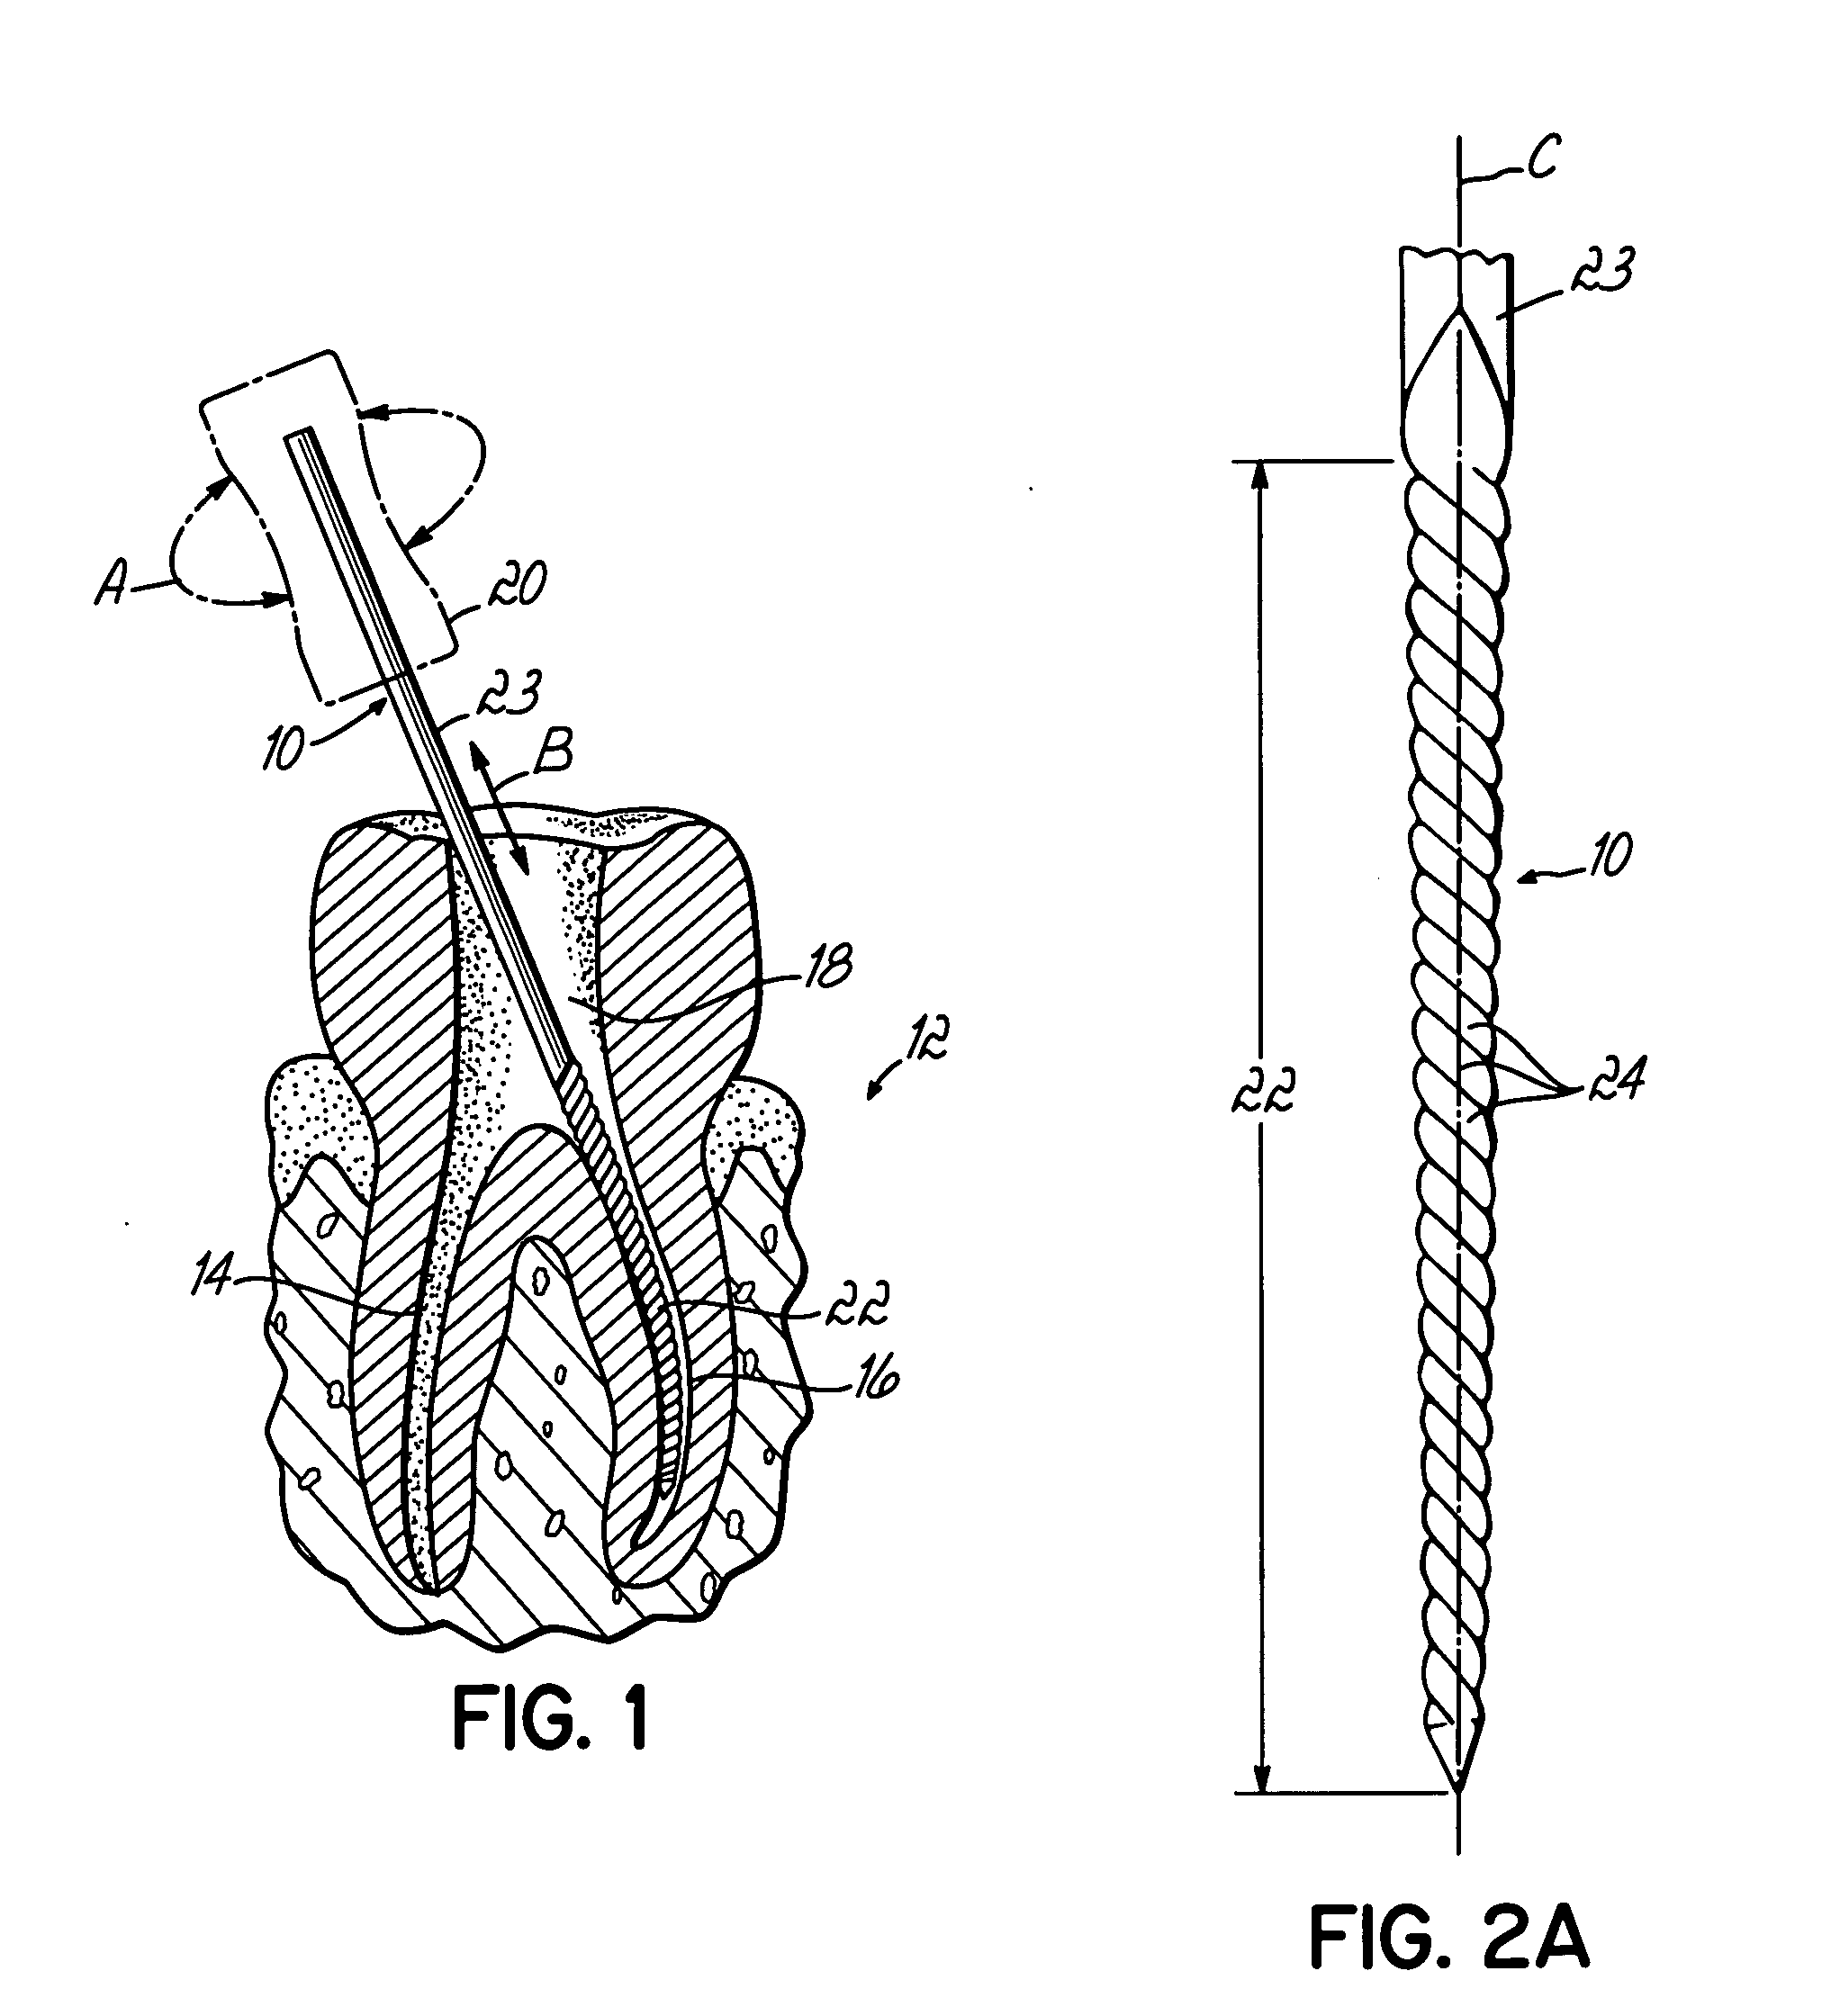 Method of manufacturing a dental instrument